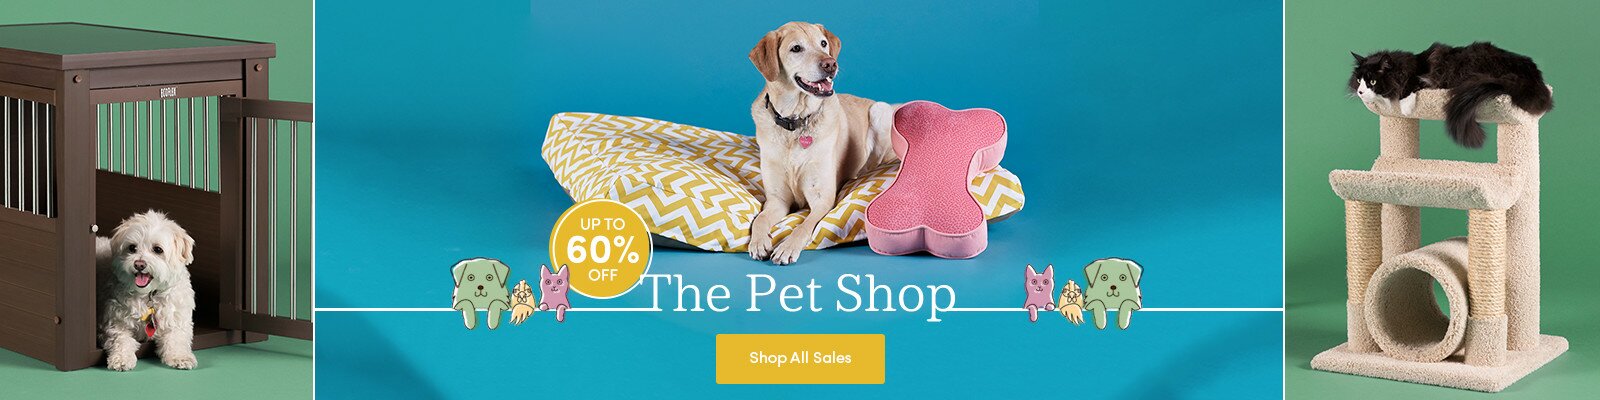 Save Up to 60% off The Pet Shop Sale at Wayfair